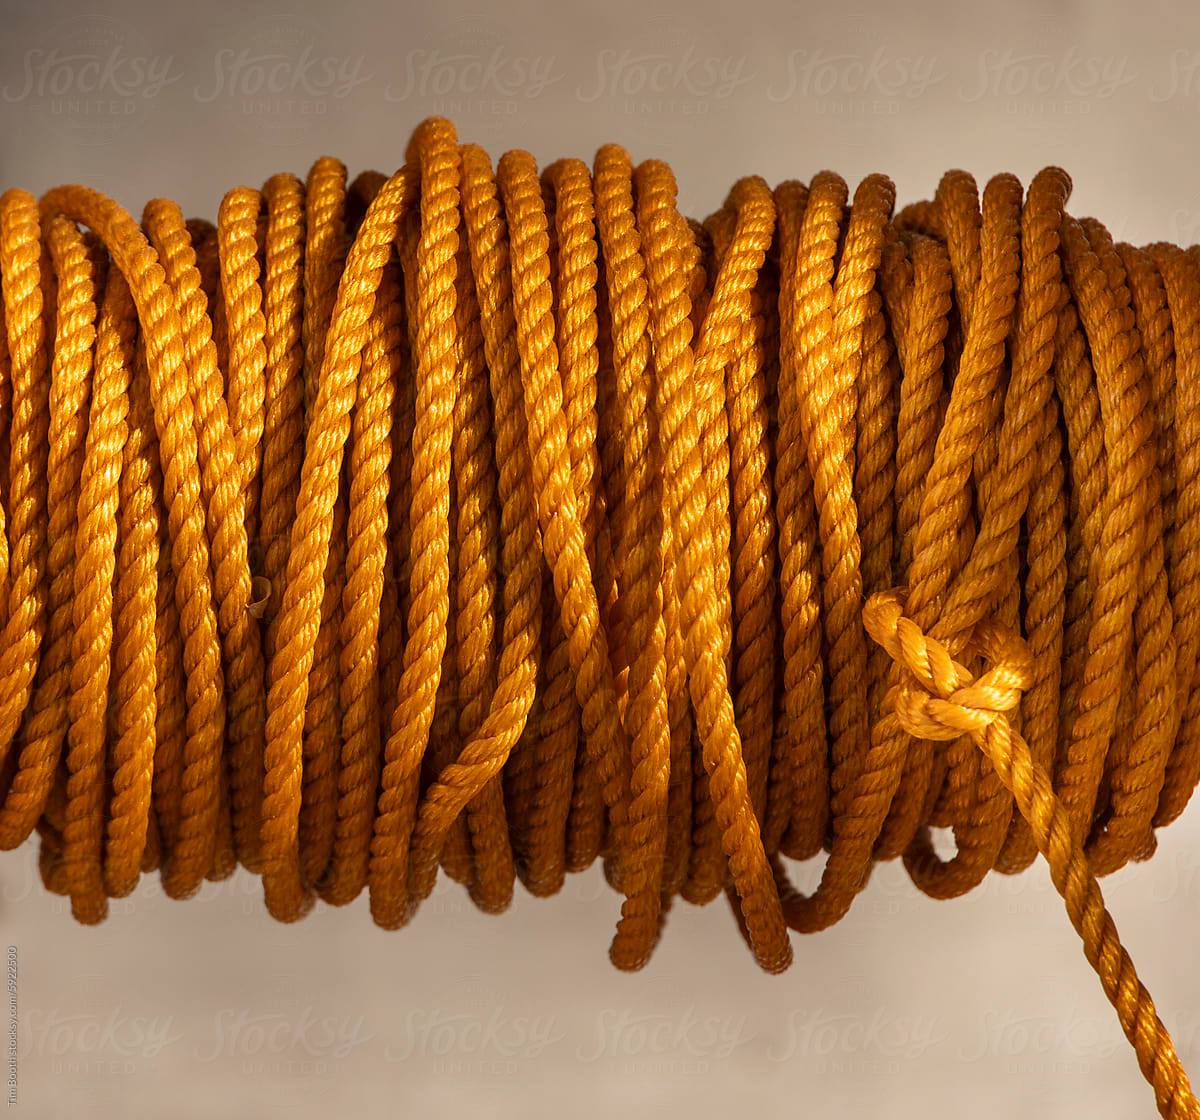 Close-up of a spool of orange cord